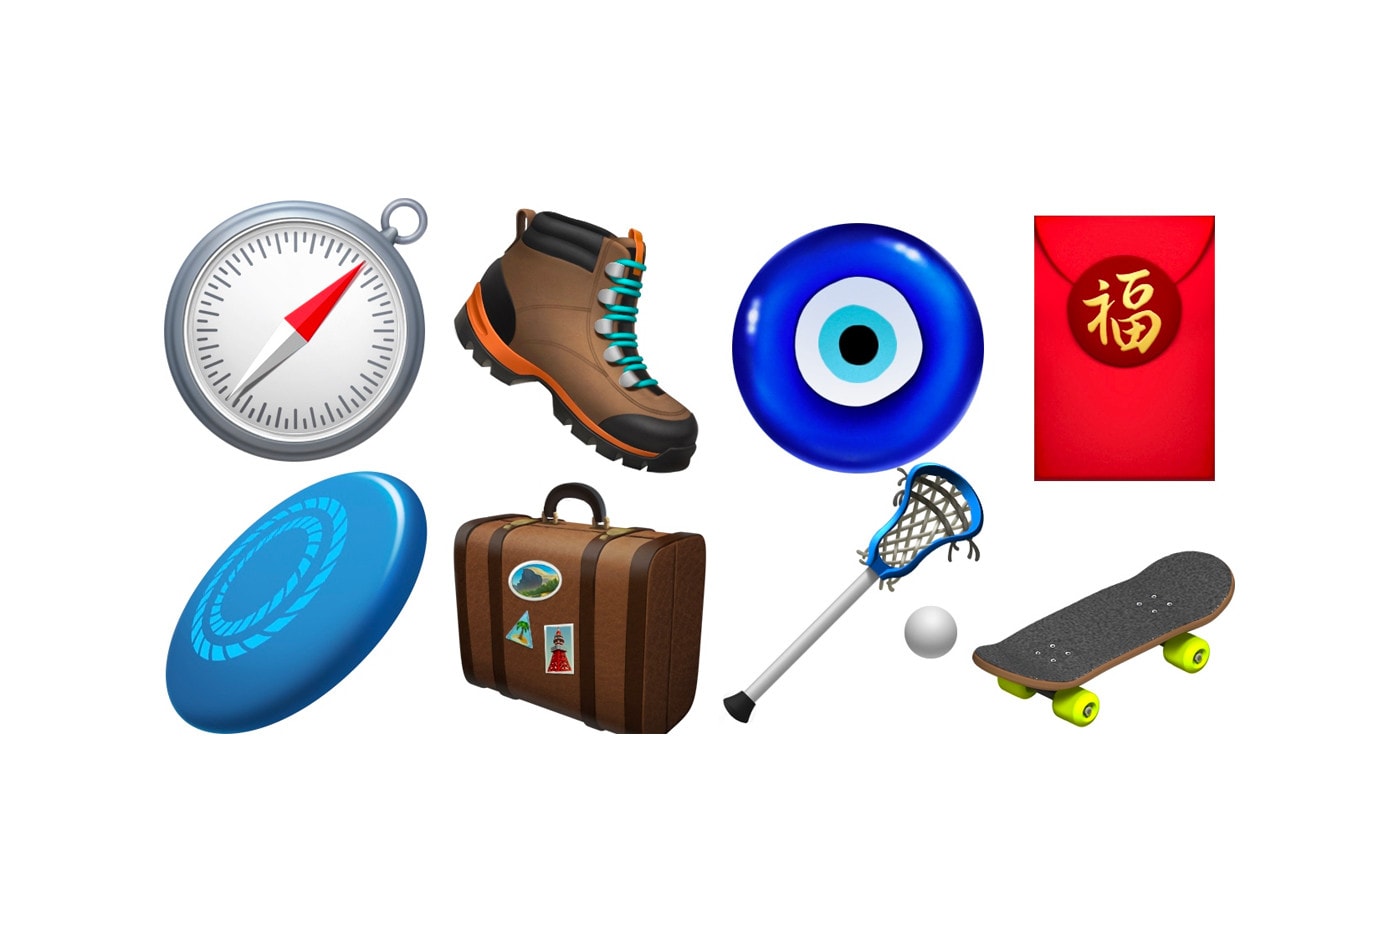 Apple 最新 iOS 12.1 版本將提供超過 70 個全新 Emoji